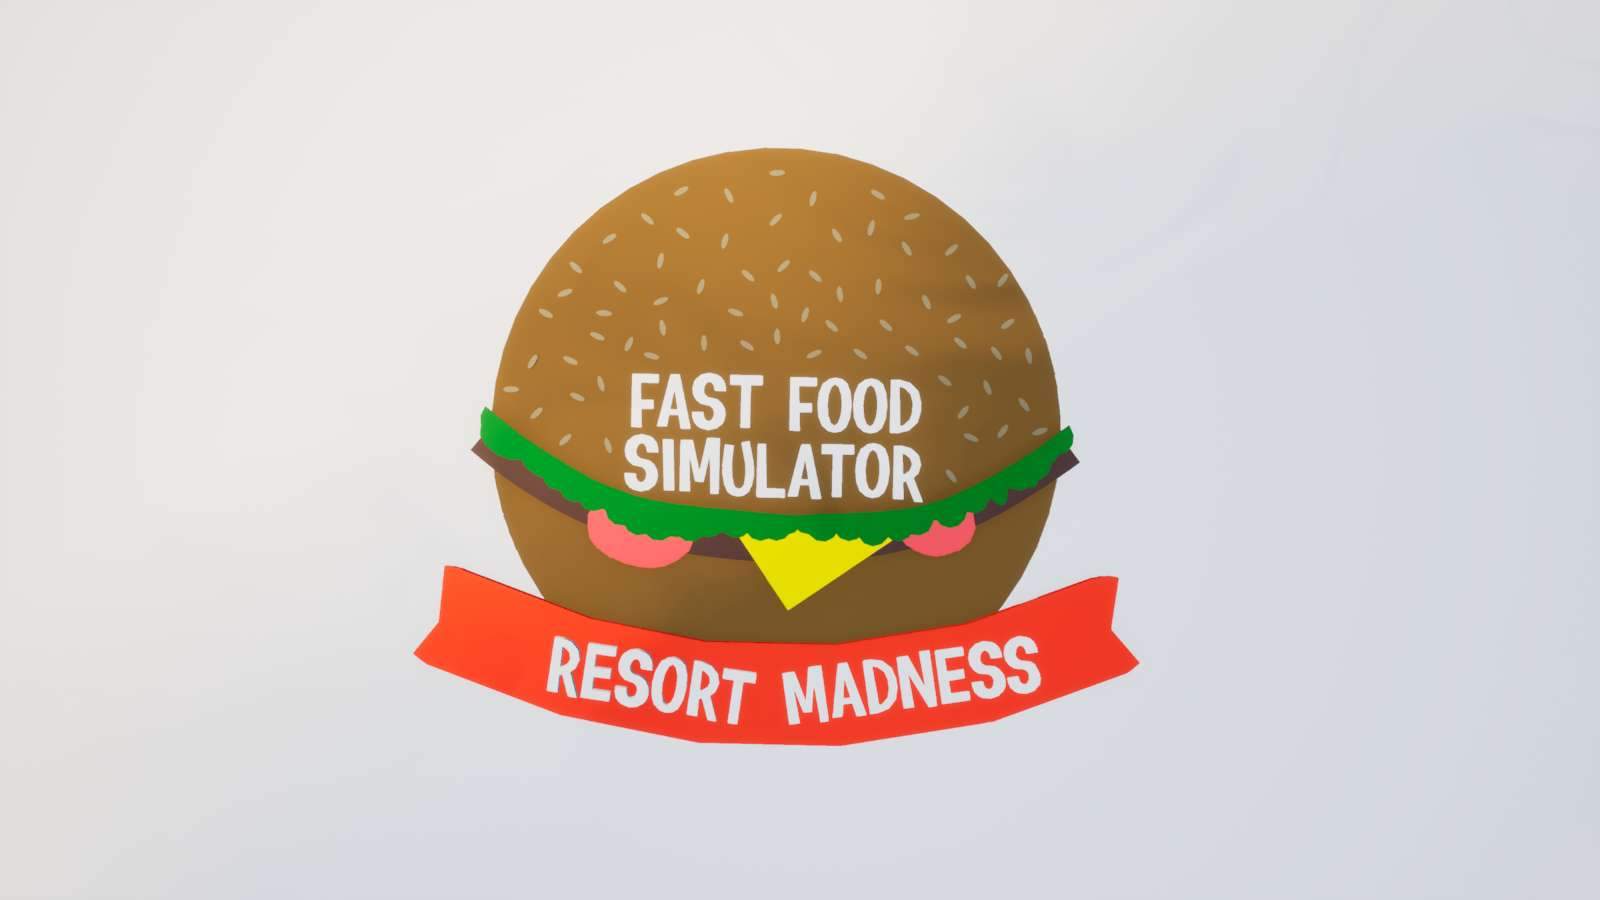 FAST FOOD SIMULATOR: RESORT MADNESS